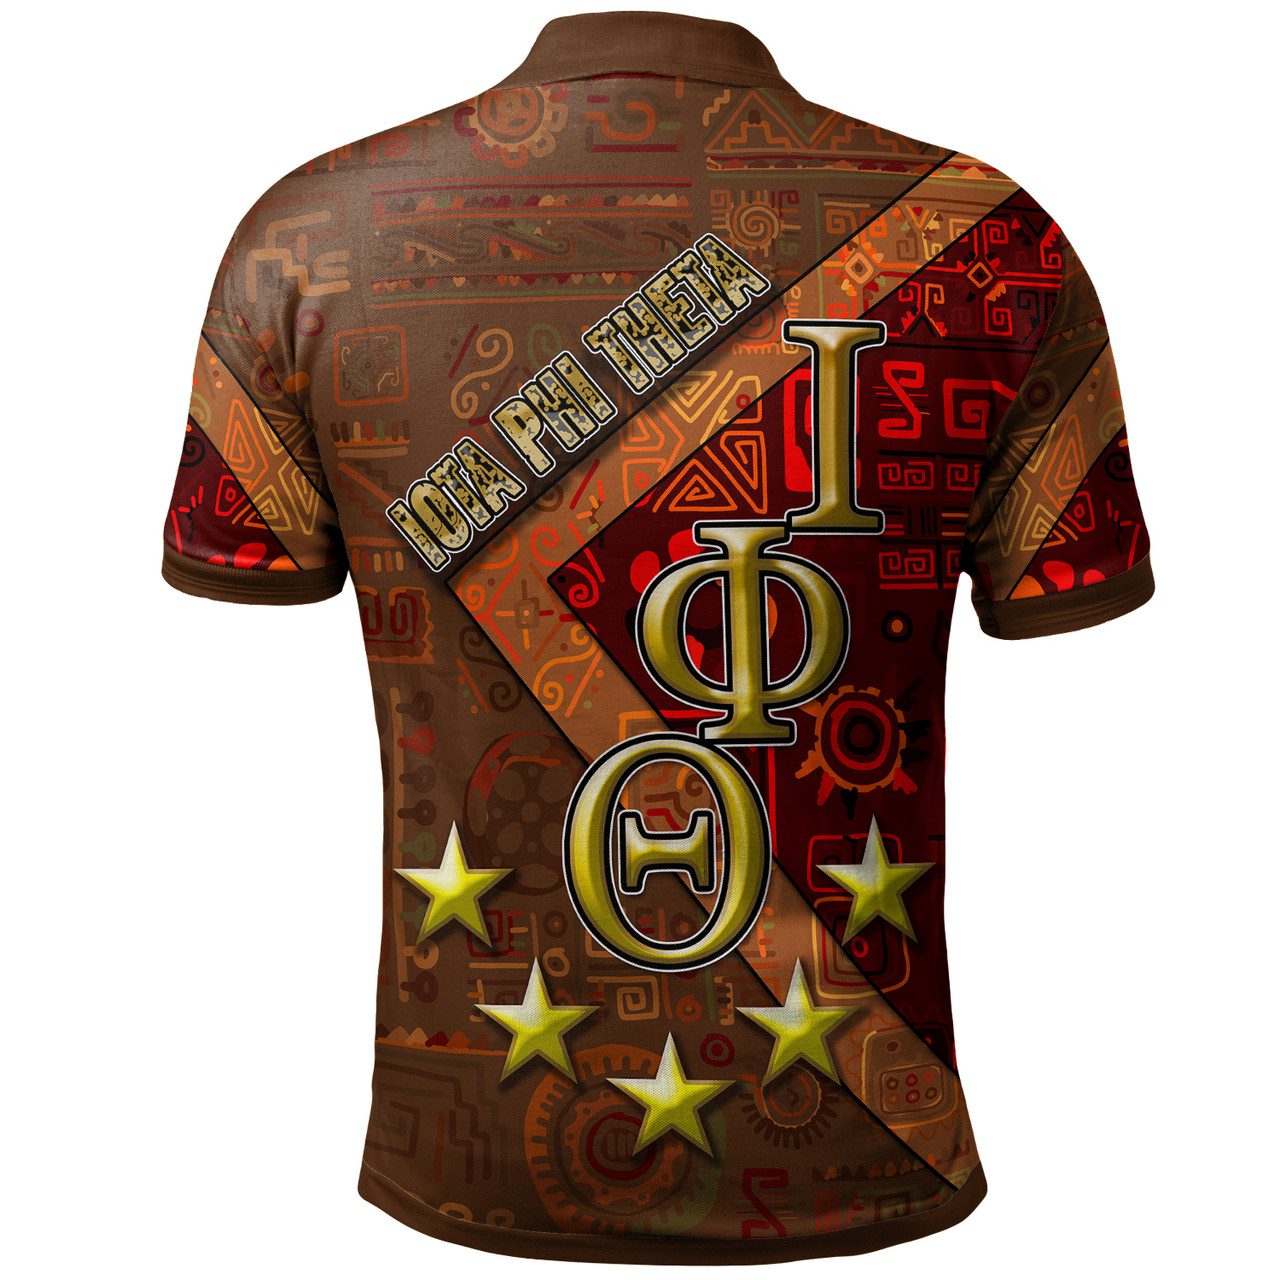 Iota Phi Theta Polo Shirt – Iota Phi Theta Fraternity With Stars Polo Shirt